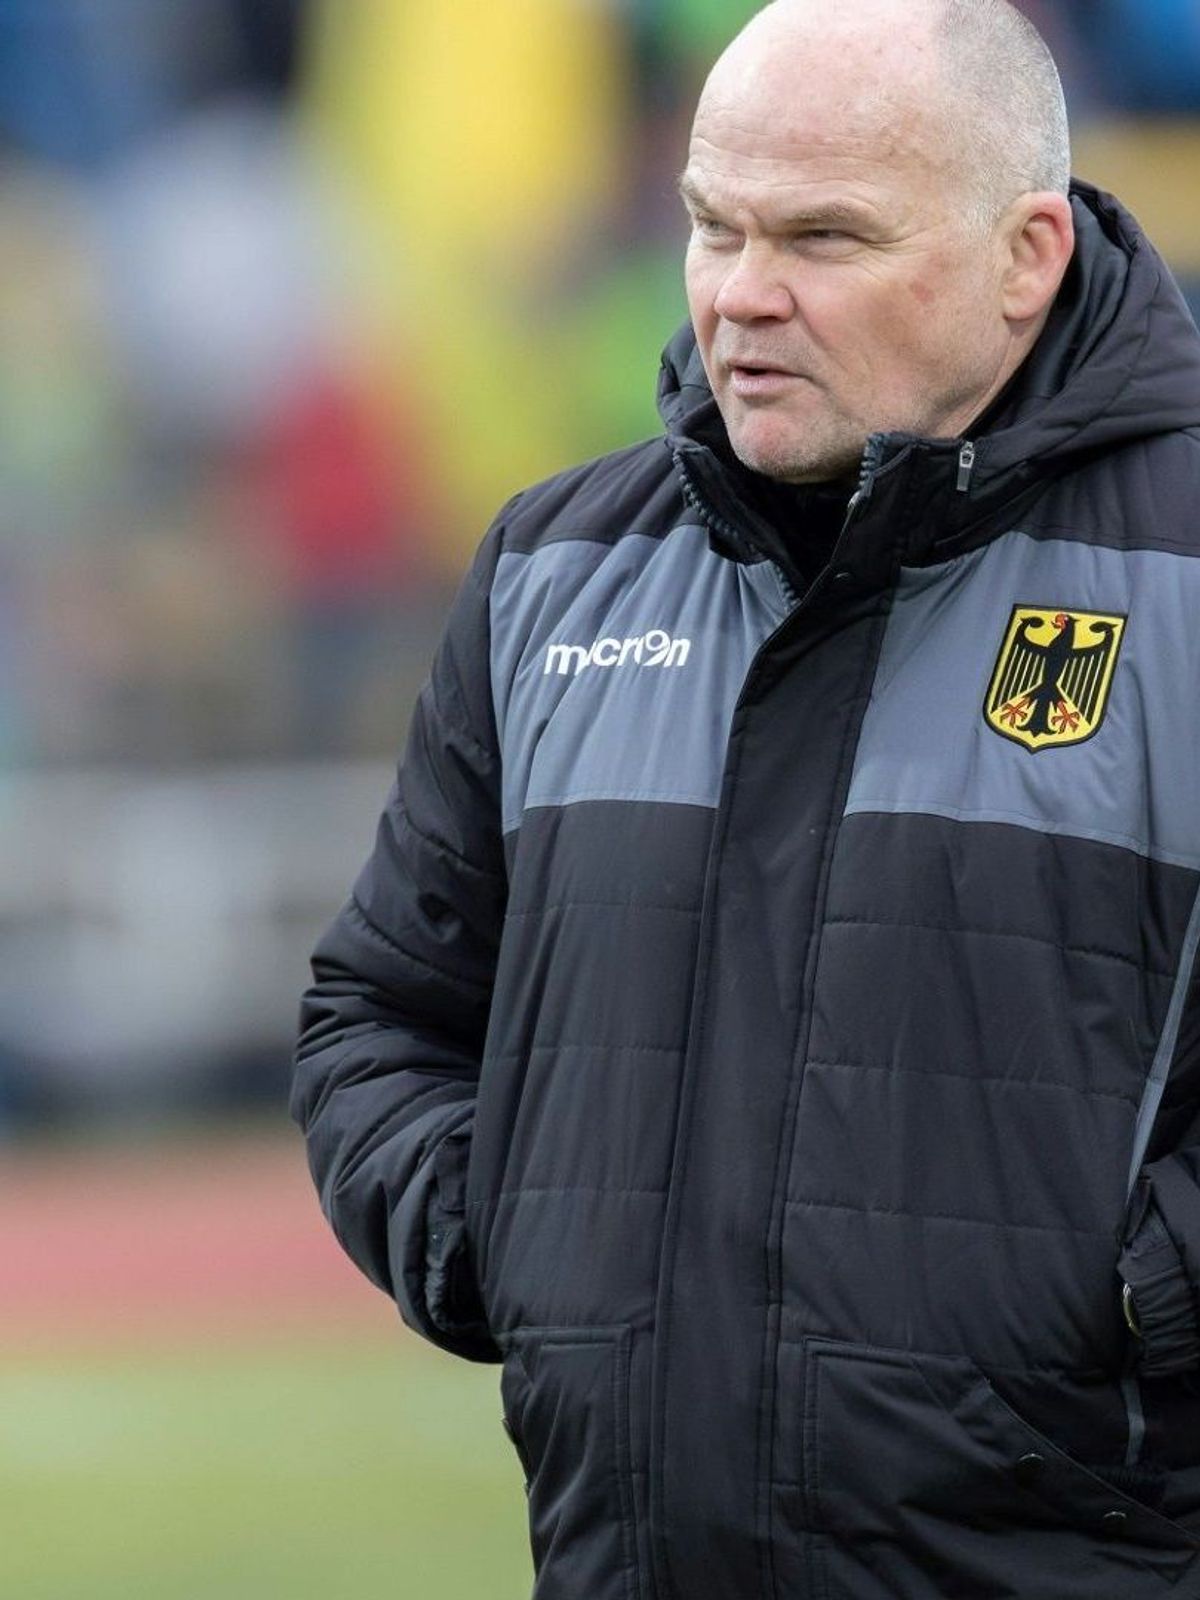 Bundestrainer Kuhlmann sieht klare Niederlage